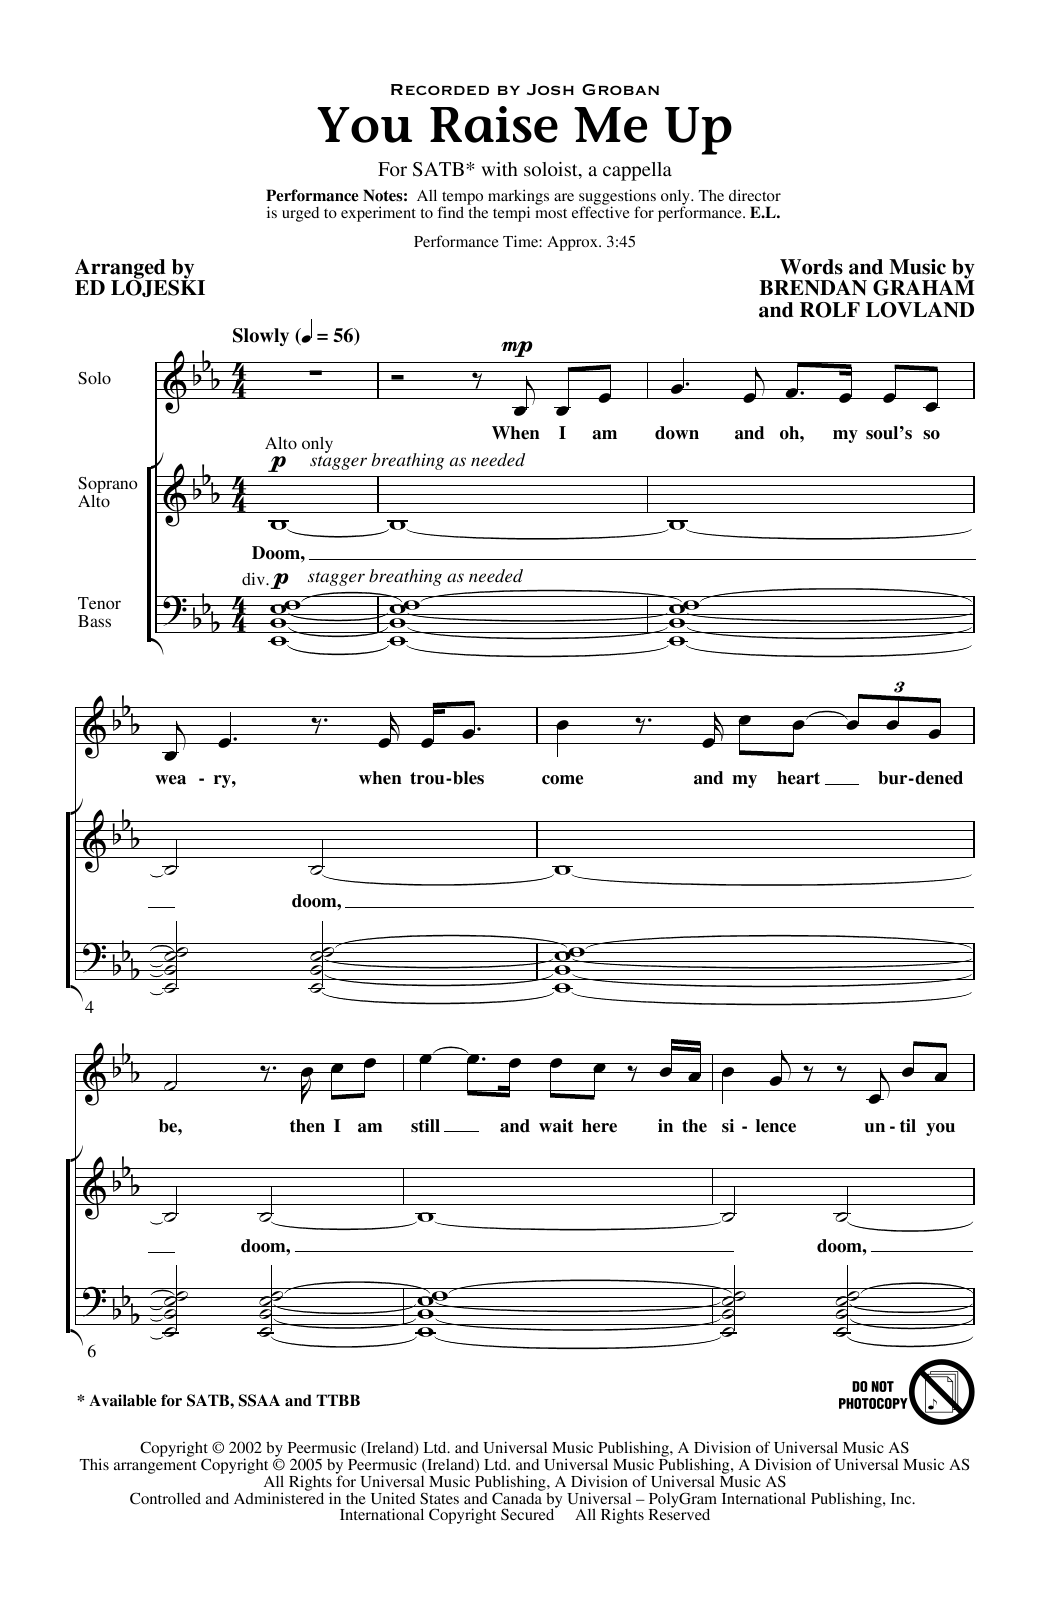 Josh Groban You Raise Me Up (arr. Ed Lojeski) Sheet Music Notes & Chords for SSA Choir - Download or Print PDF